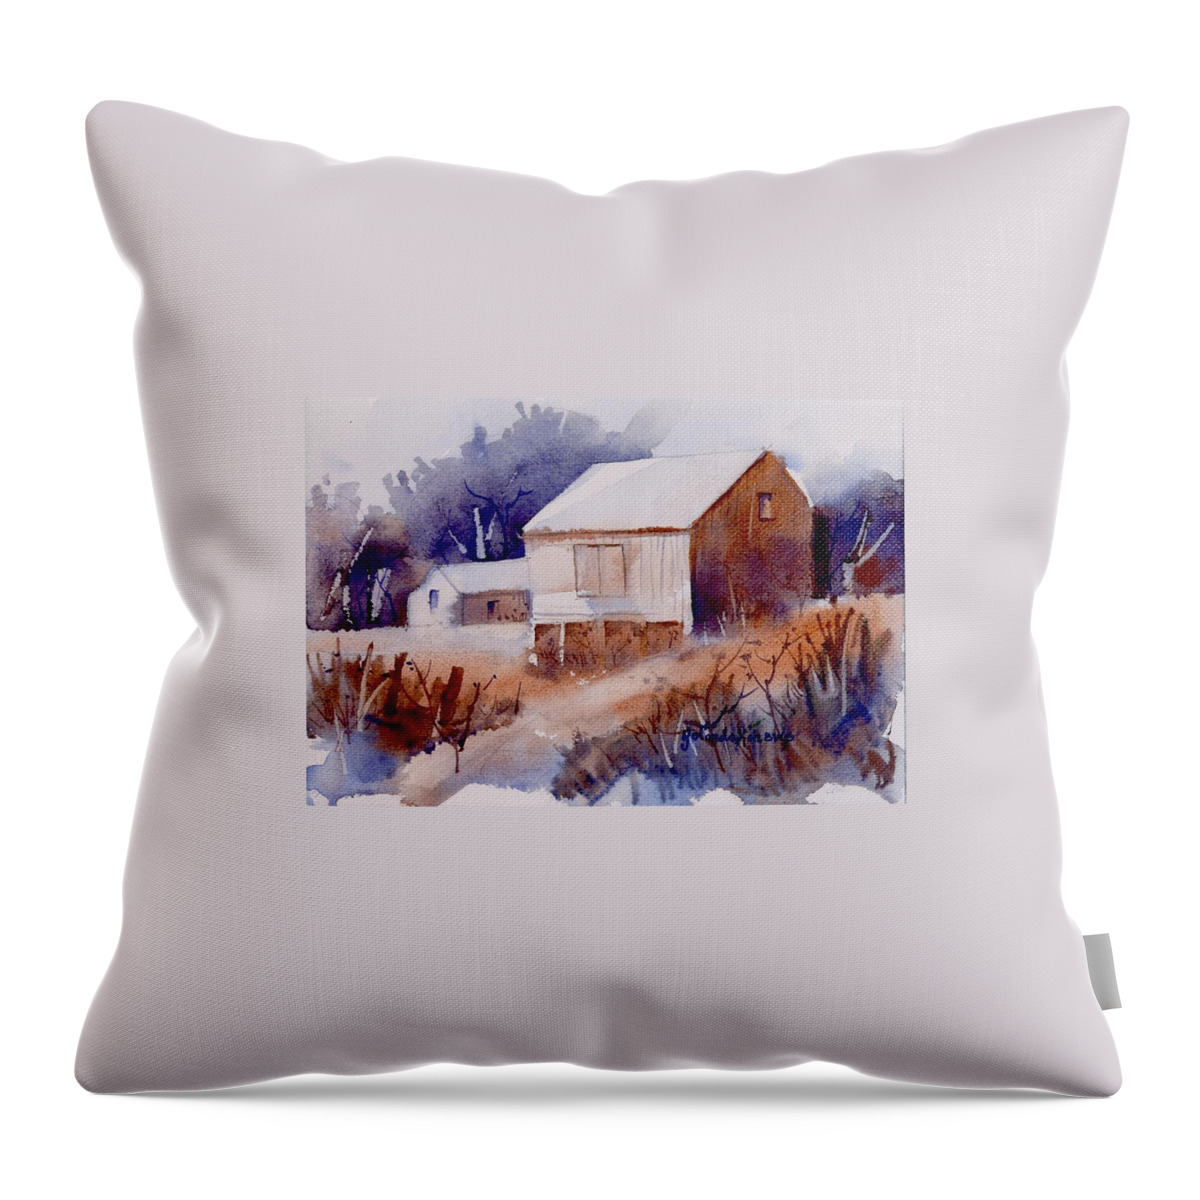 Farm Throw Pillow featuring the painting Curtis Farm in Ellicott City by Yolanda Koh